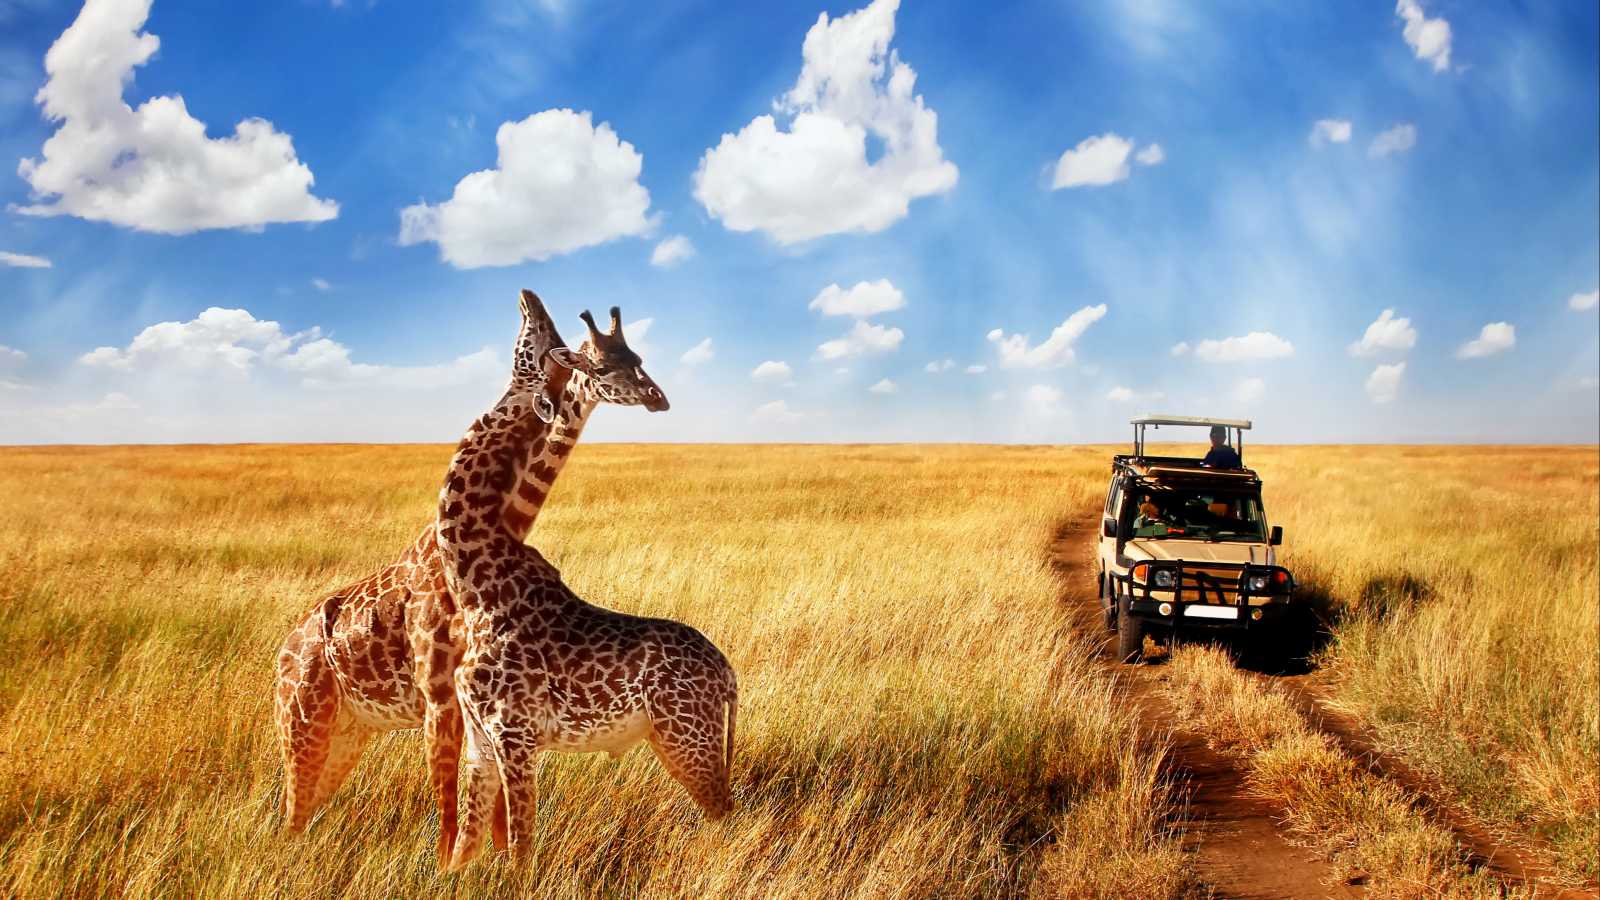 safari urlaub afrika pauschalreise